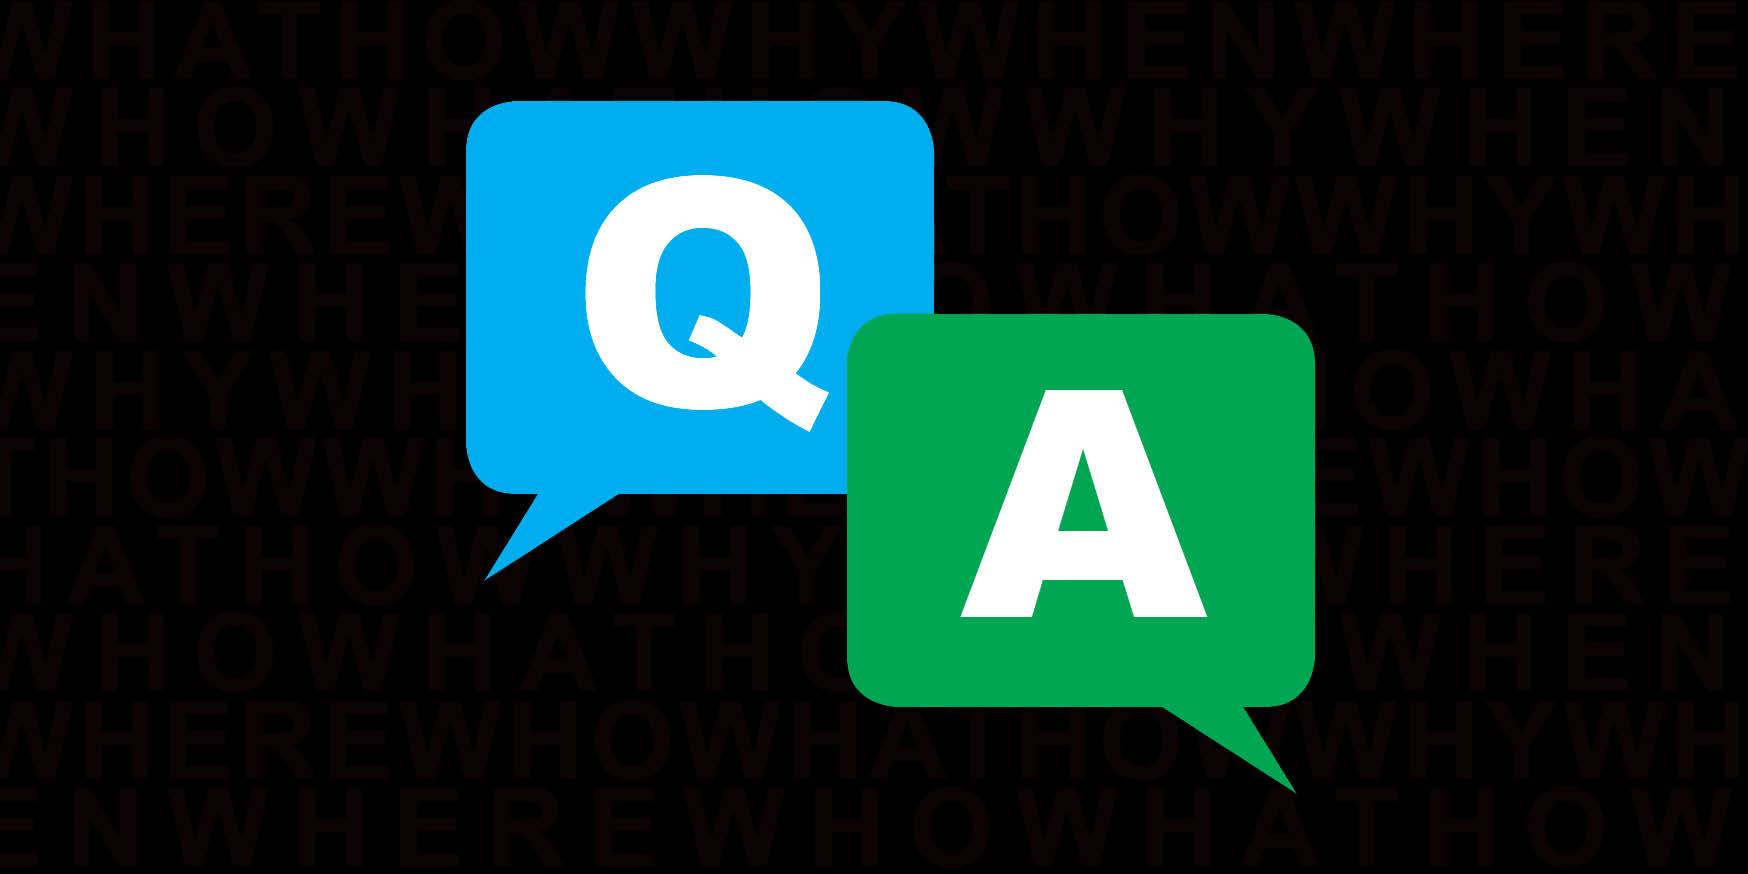 Q & A – 8:00 Service